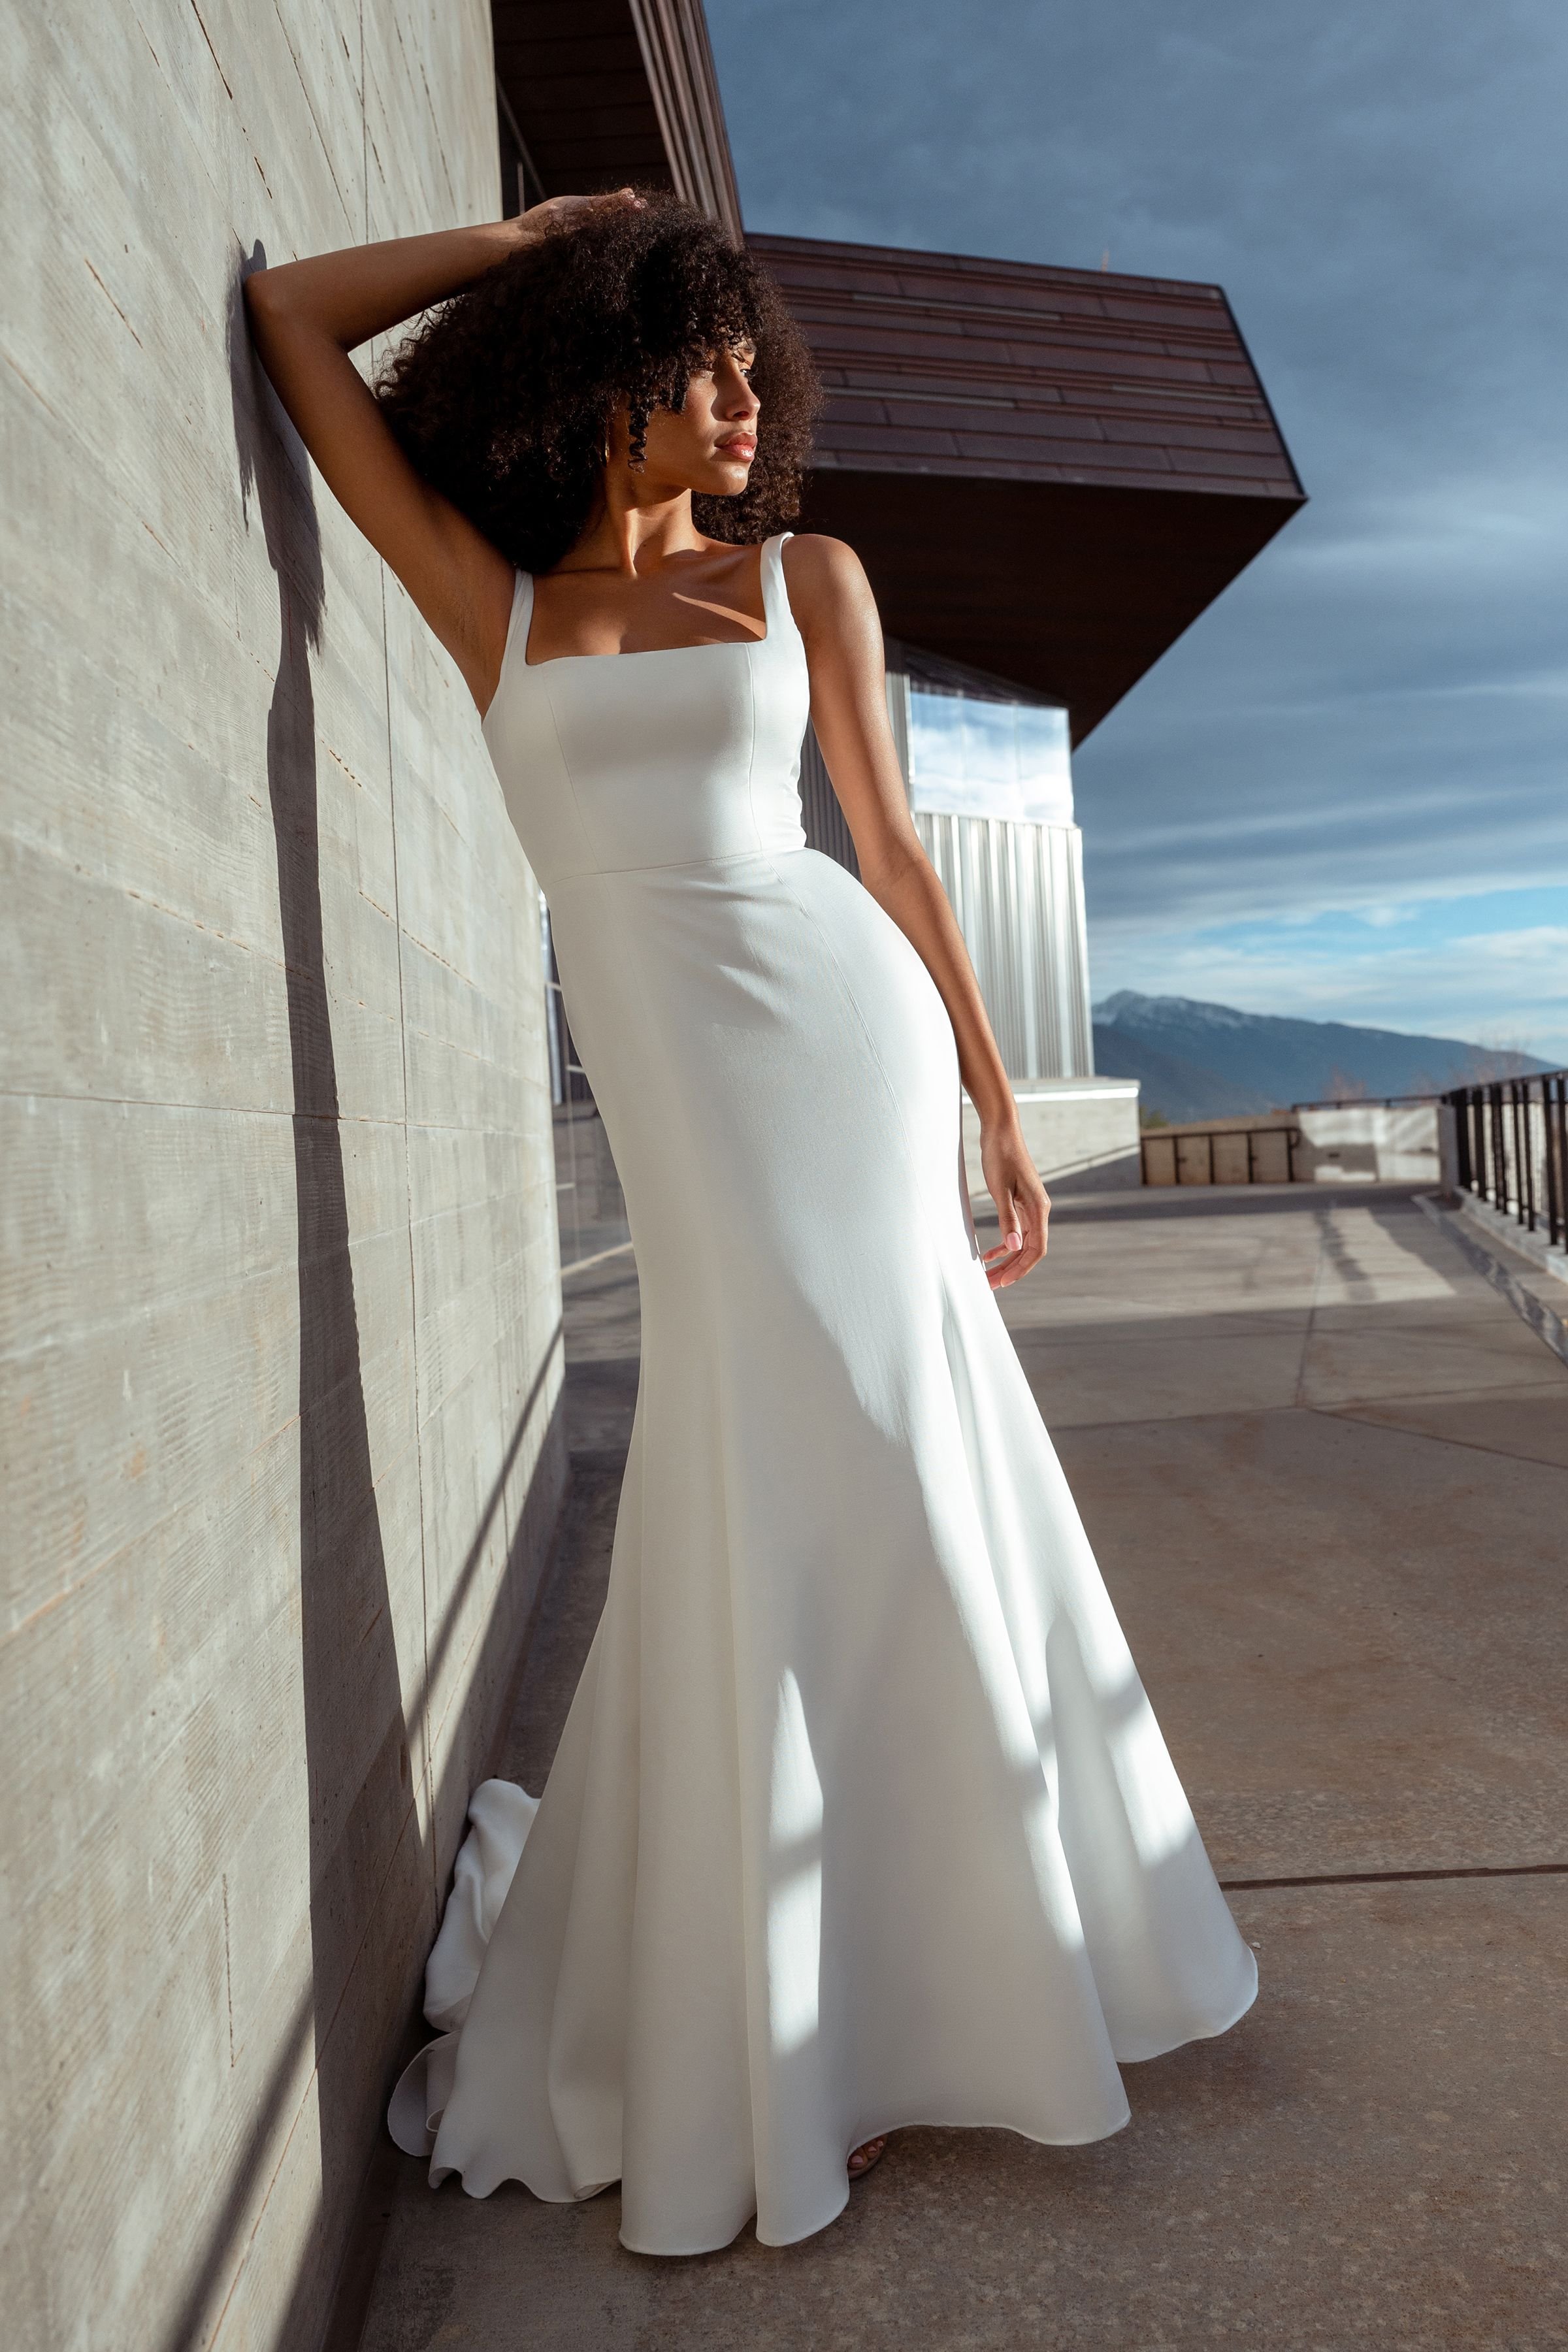 blanc-de-blanc-bridal-boutique-pittsburgh-dress-wedding-gown-Jana.jpeg